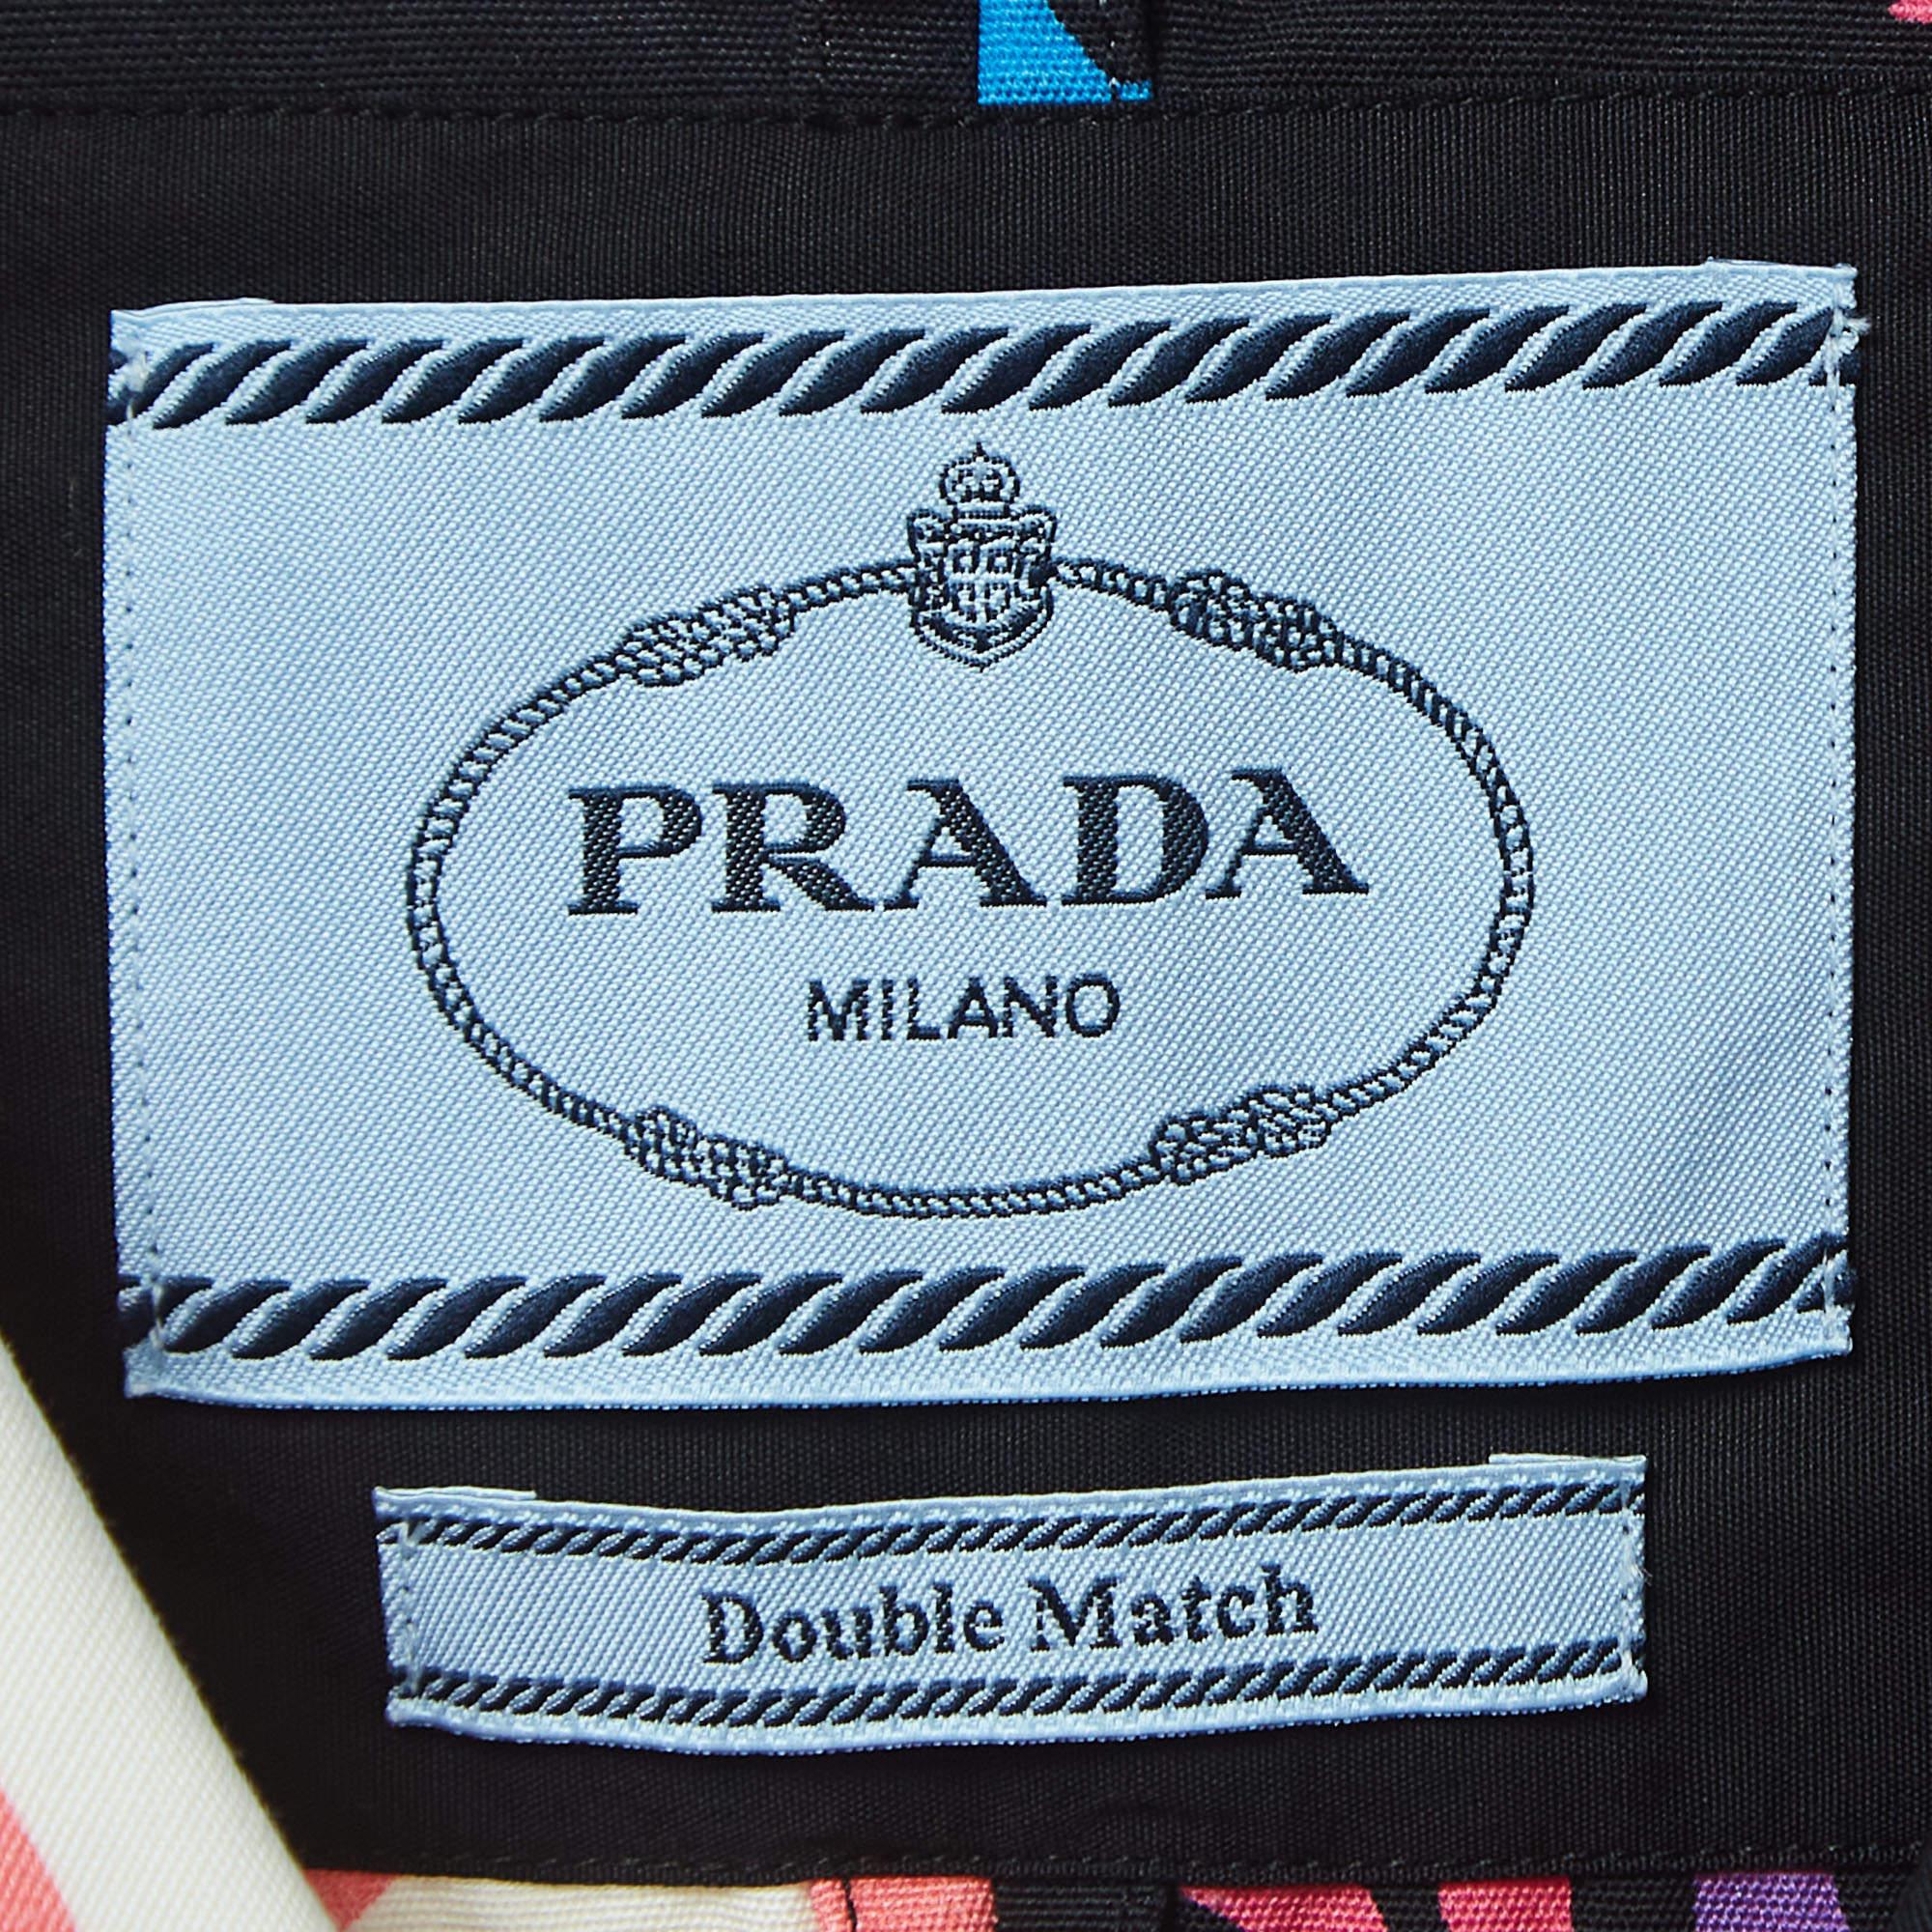 Prada Double Match Multicolor Printed Cotton Short Sleeve Shirt L 2